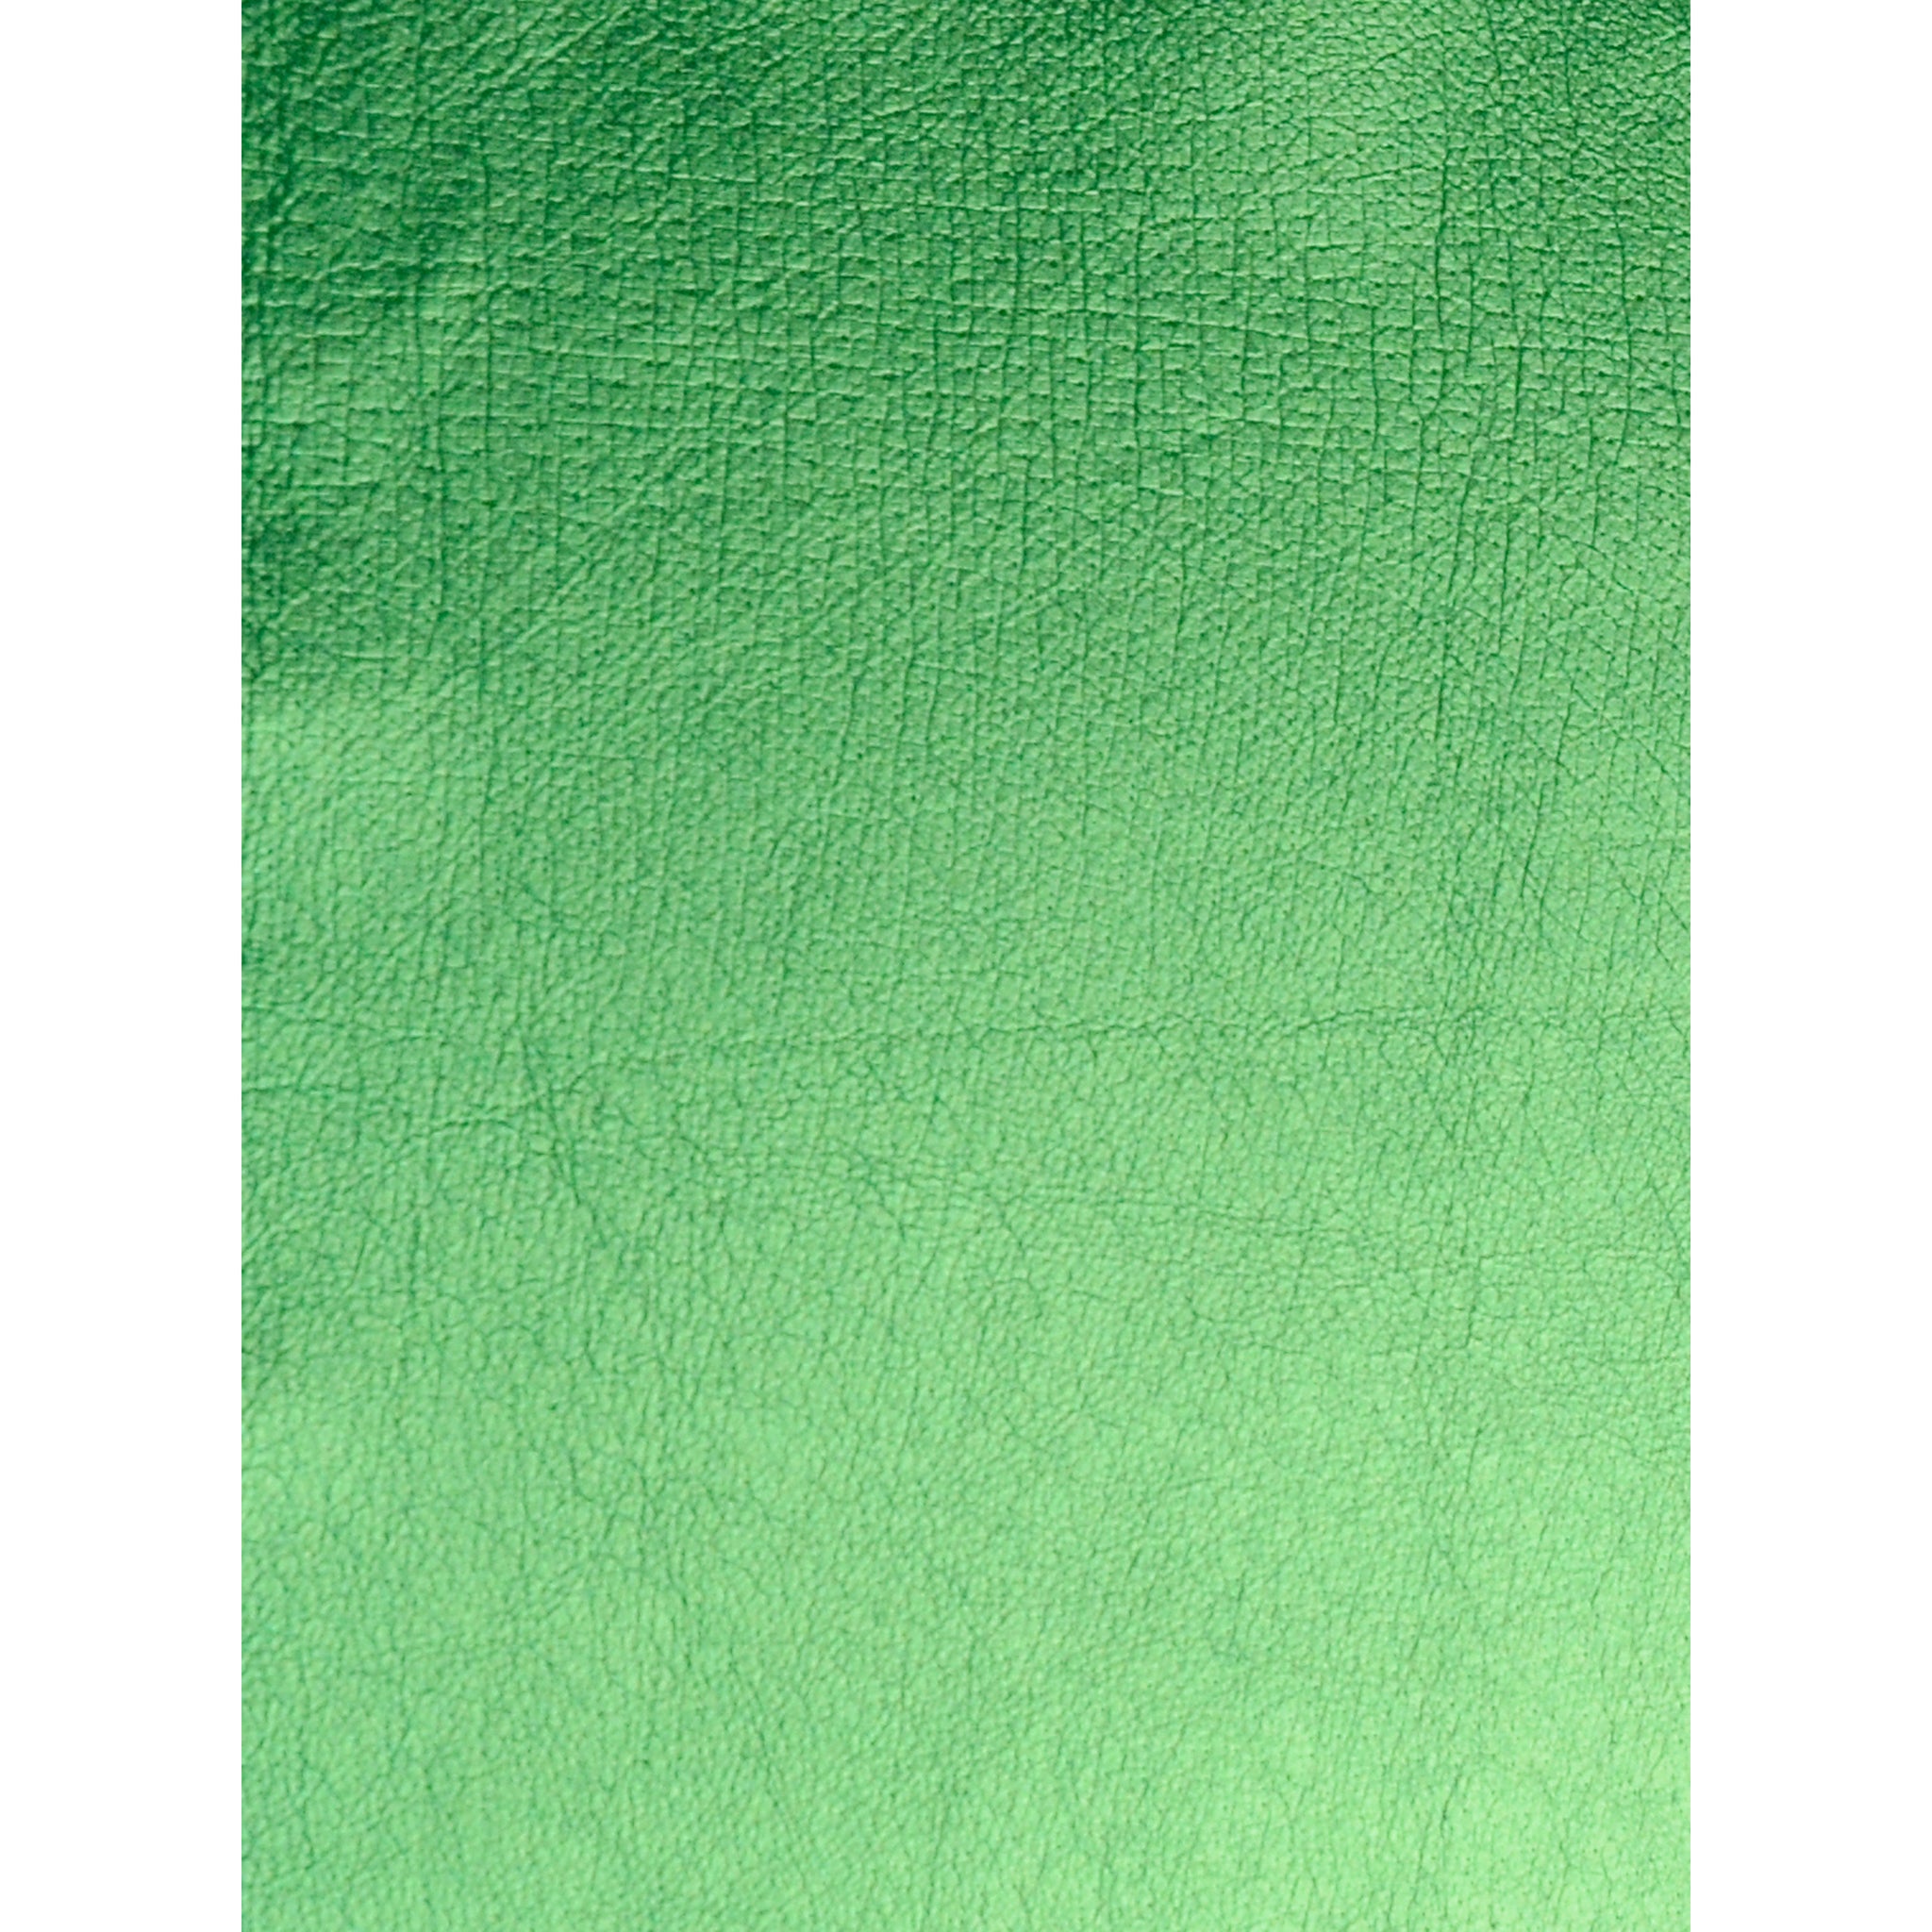 Harlequin Green Metallic Foil Leather